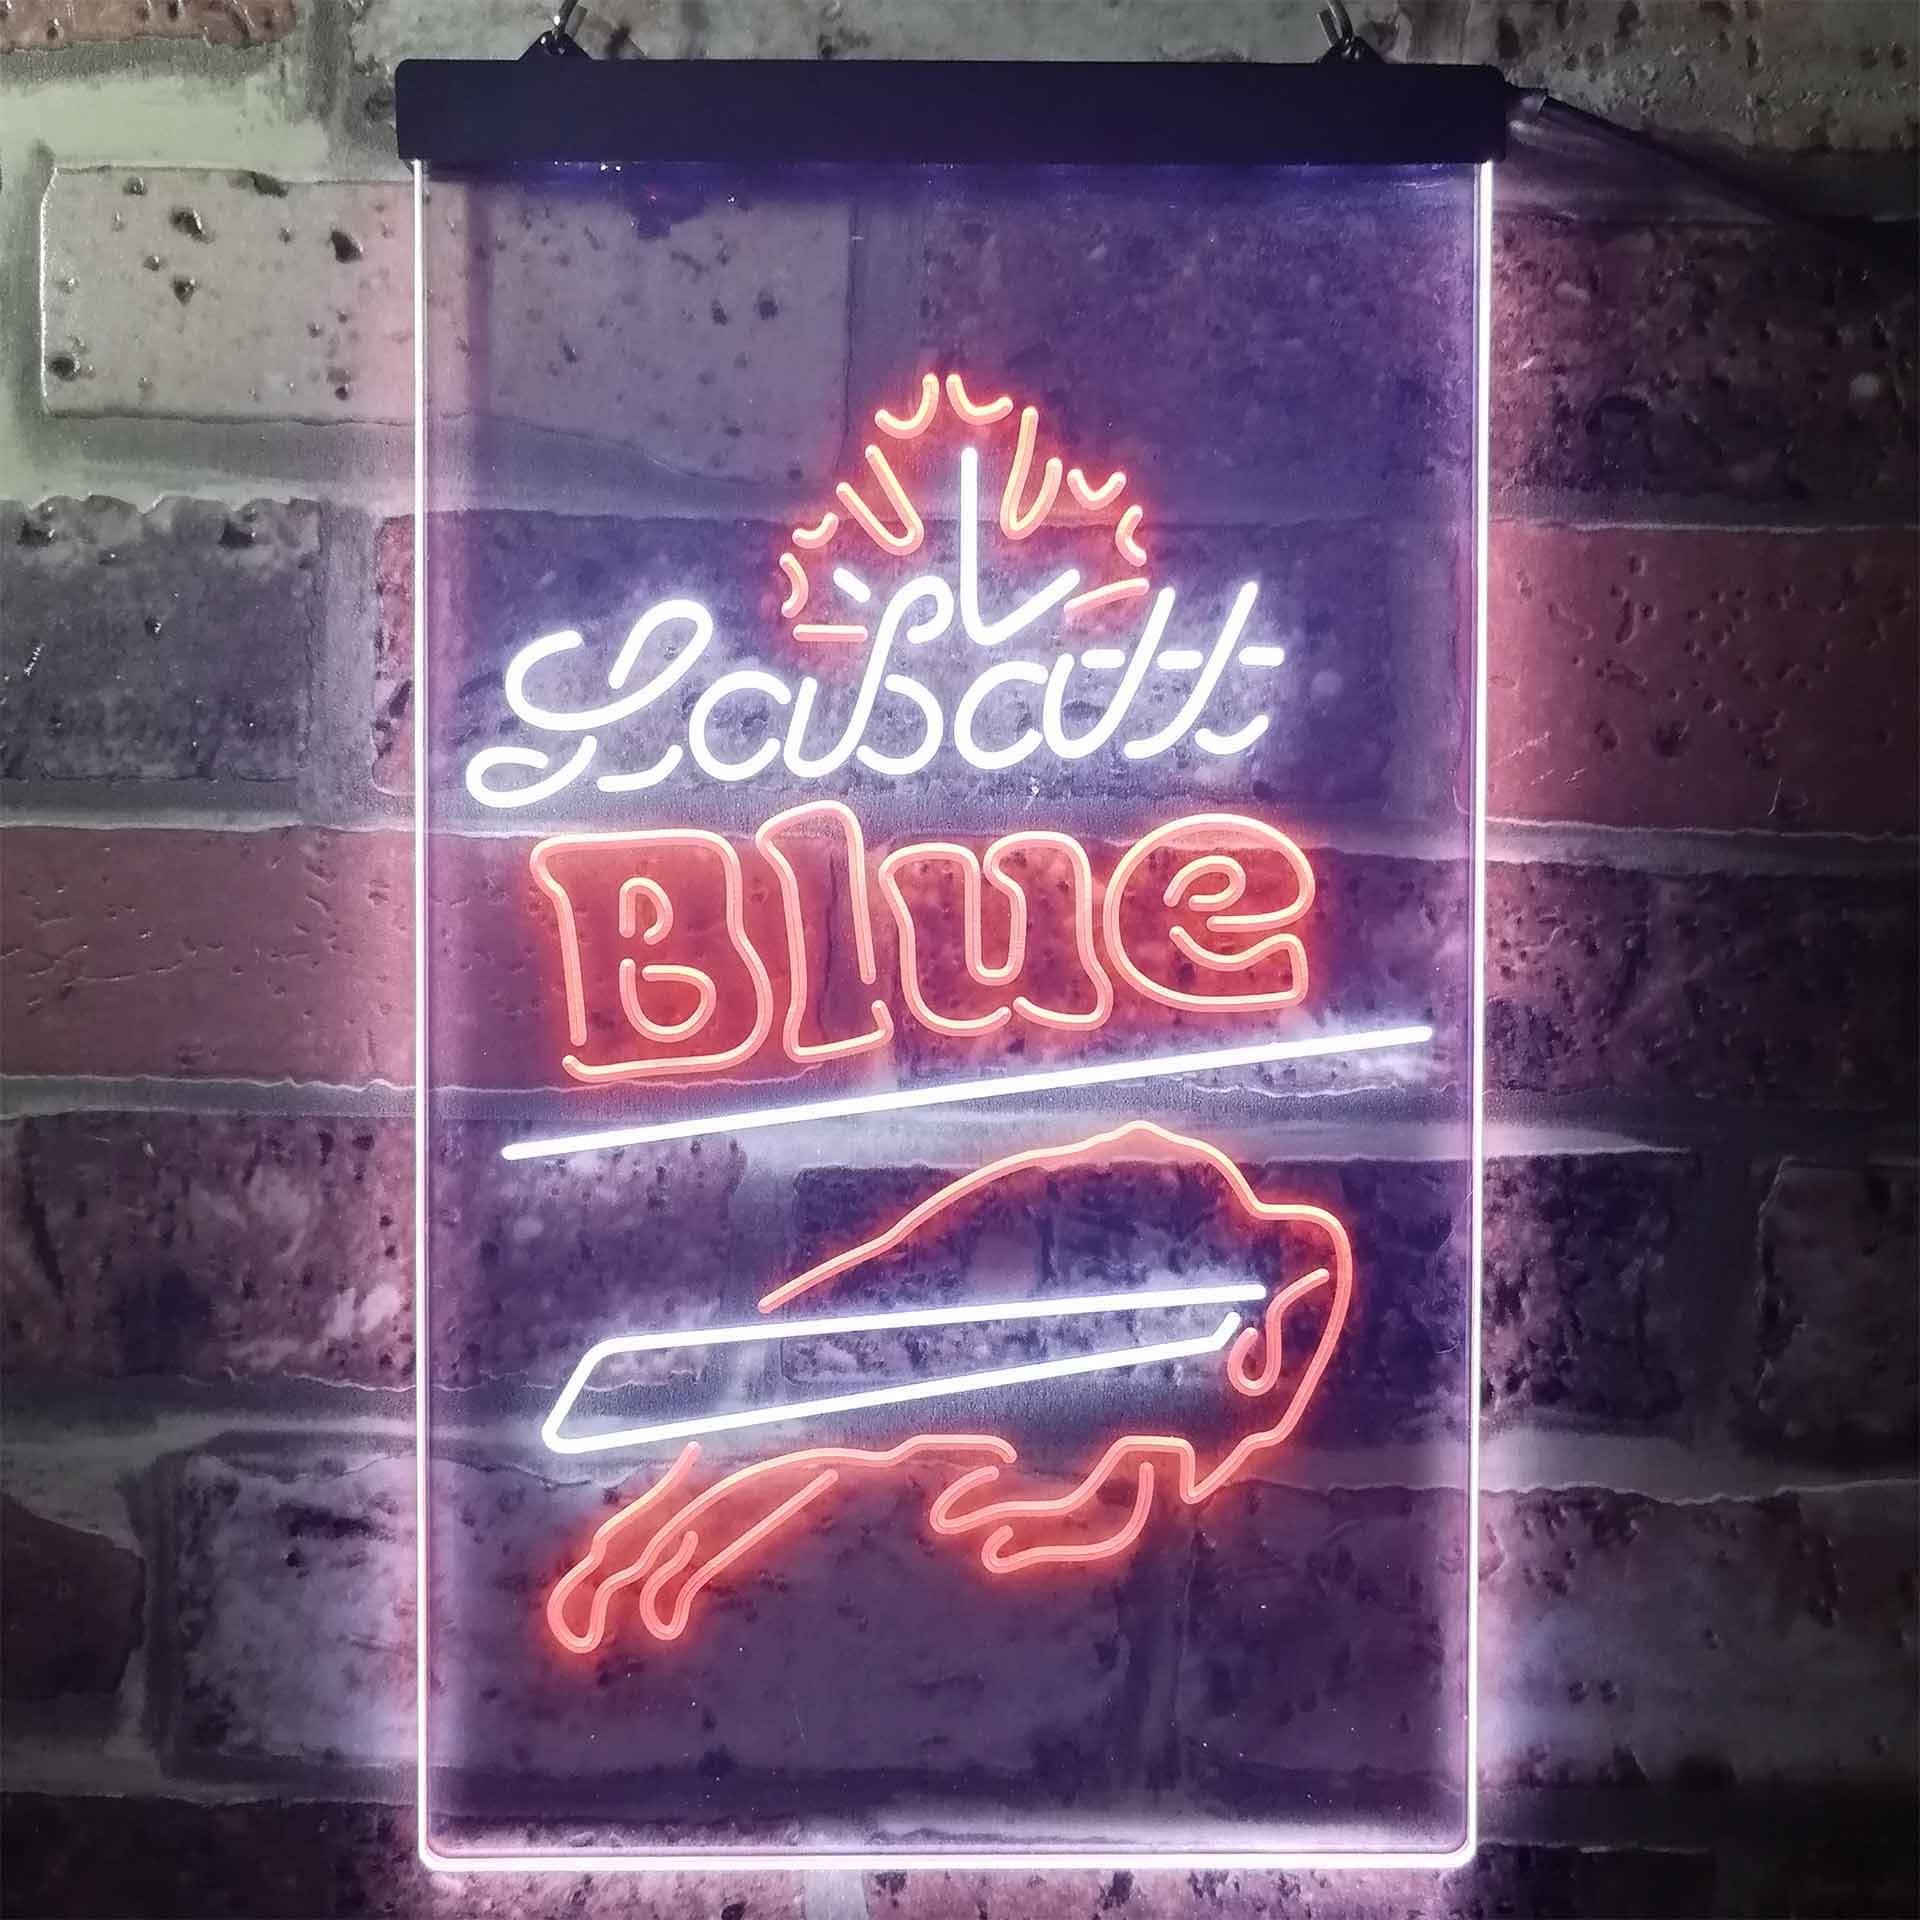 New Labatt Blue Buffalo Bills Real glass Neon Sign 32"x24" Beer Lamp Light 